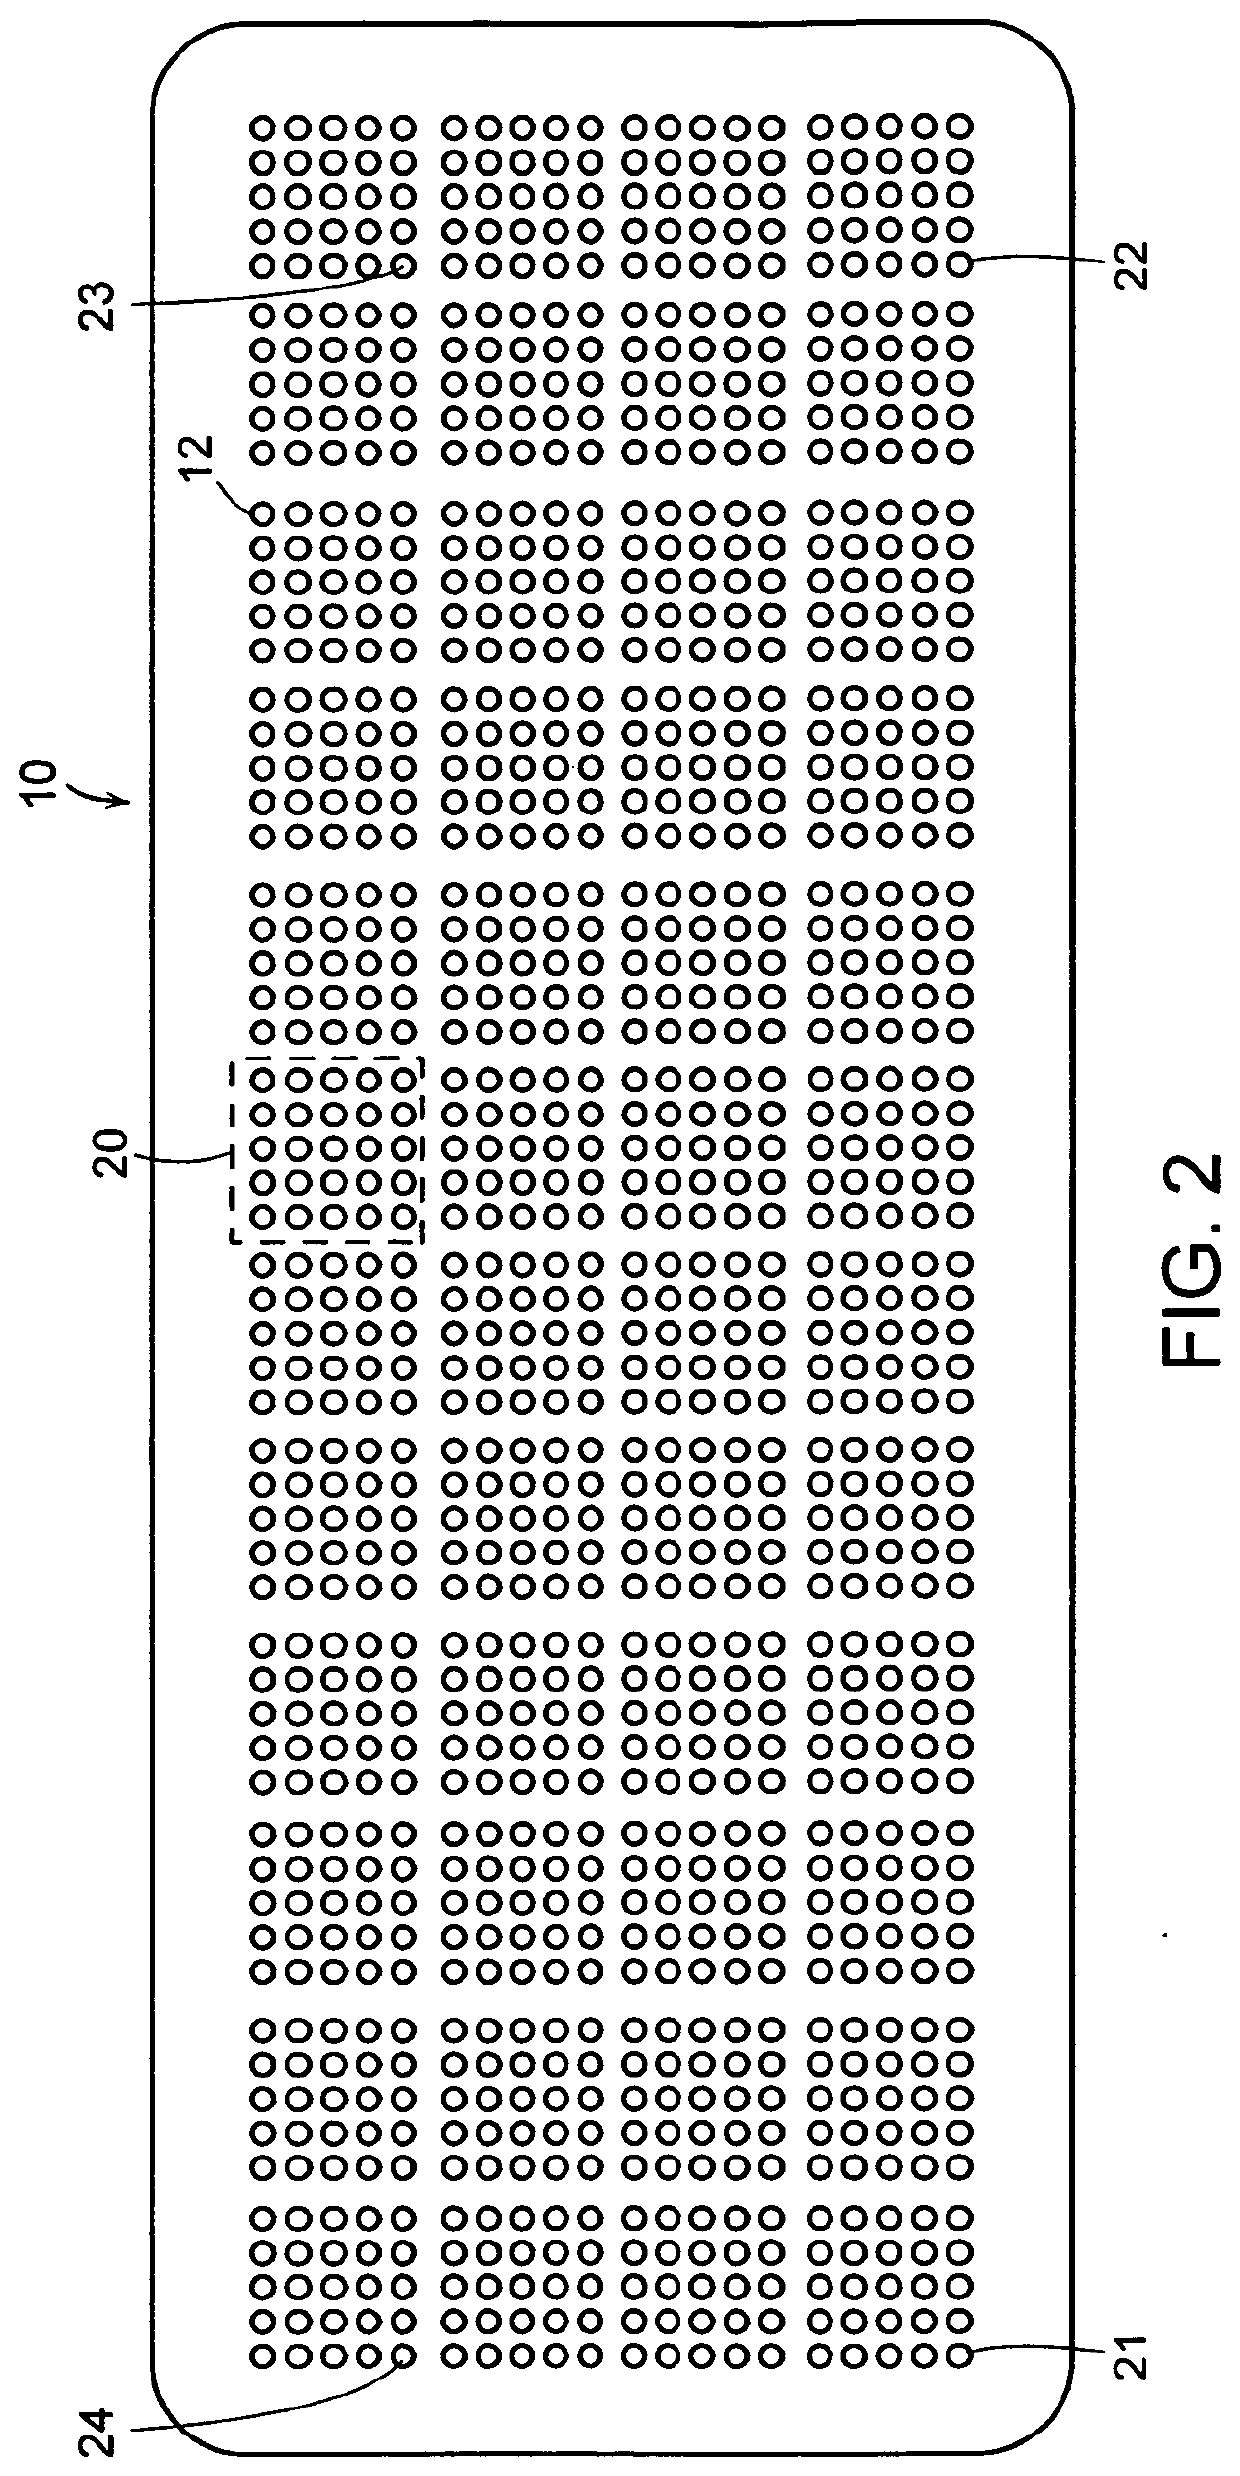 Coating process for microfluidic sample arrays